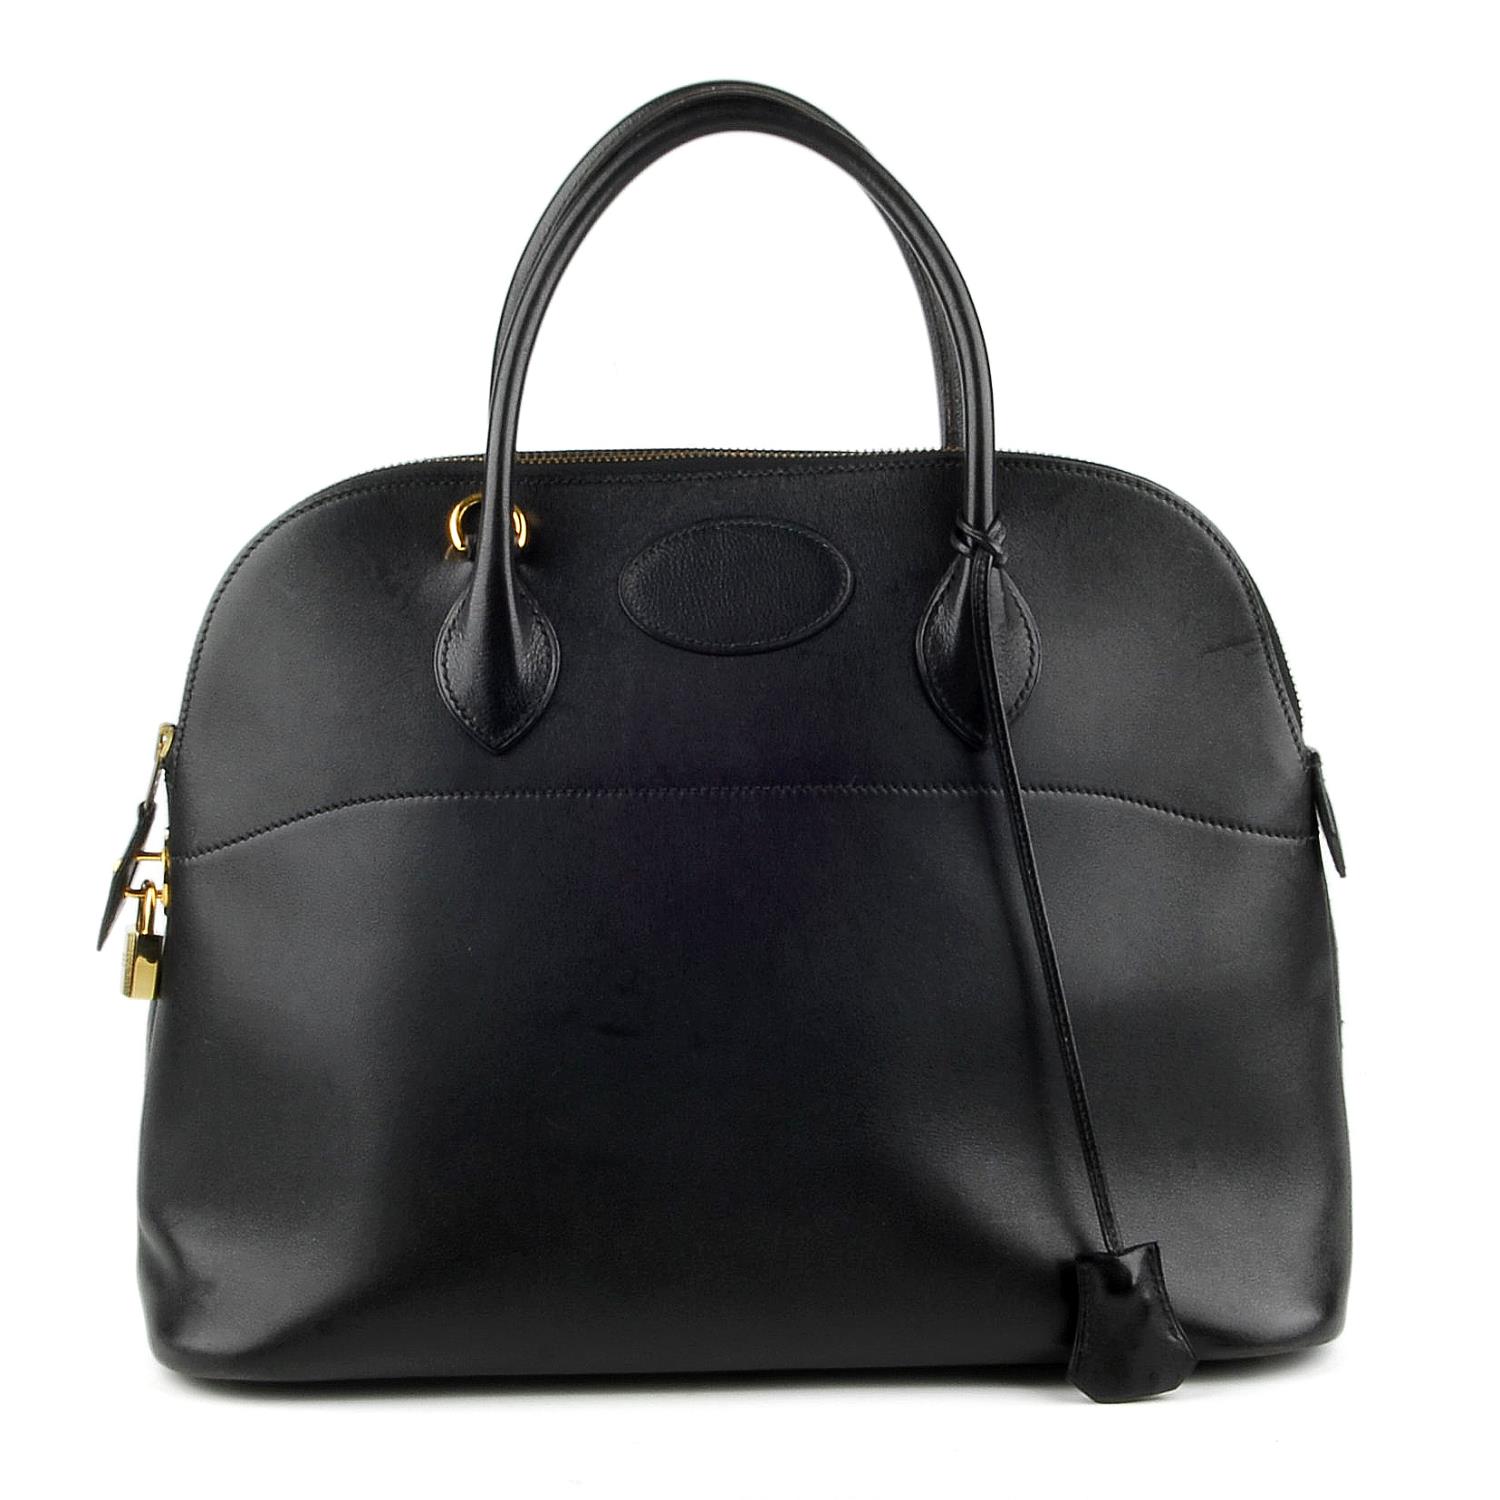 HERMÈS - a 1992 black Bolide handbag. Designed with a smooth black leather exterior and gold-tone